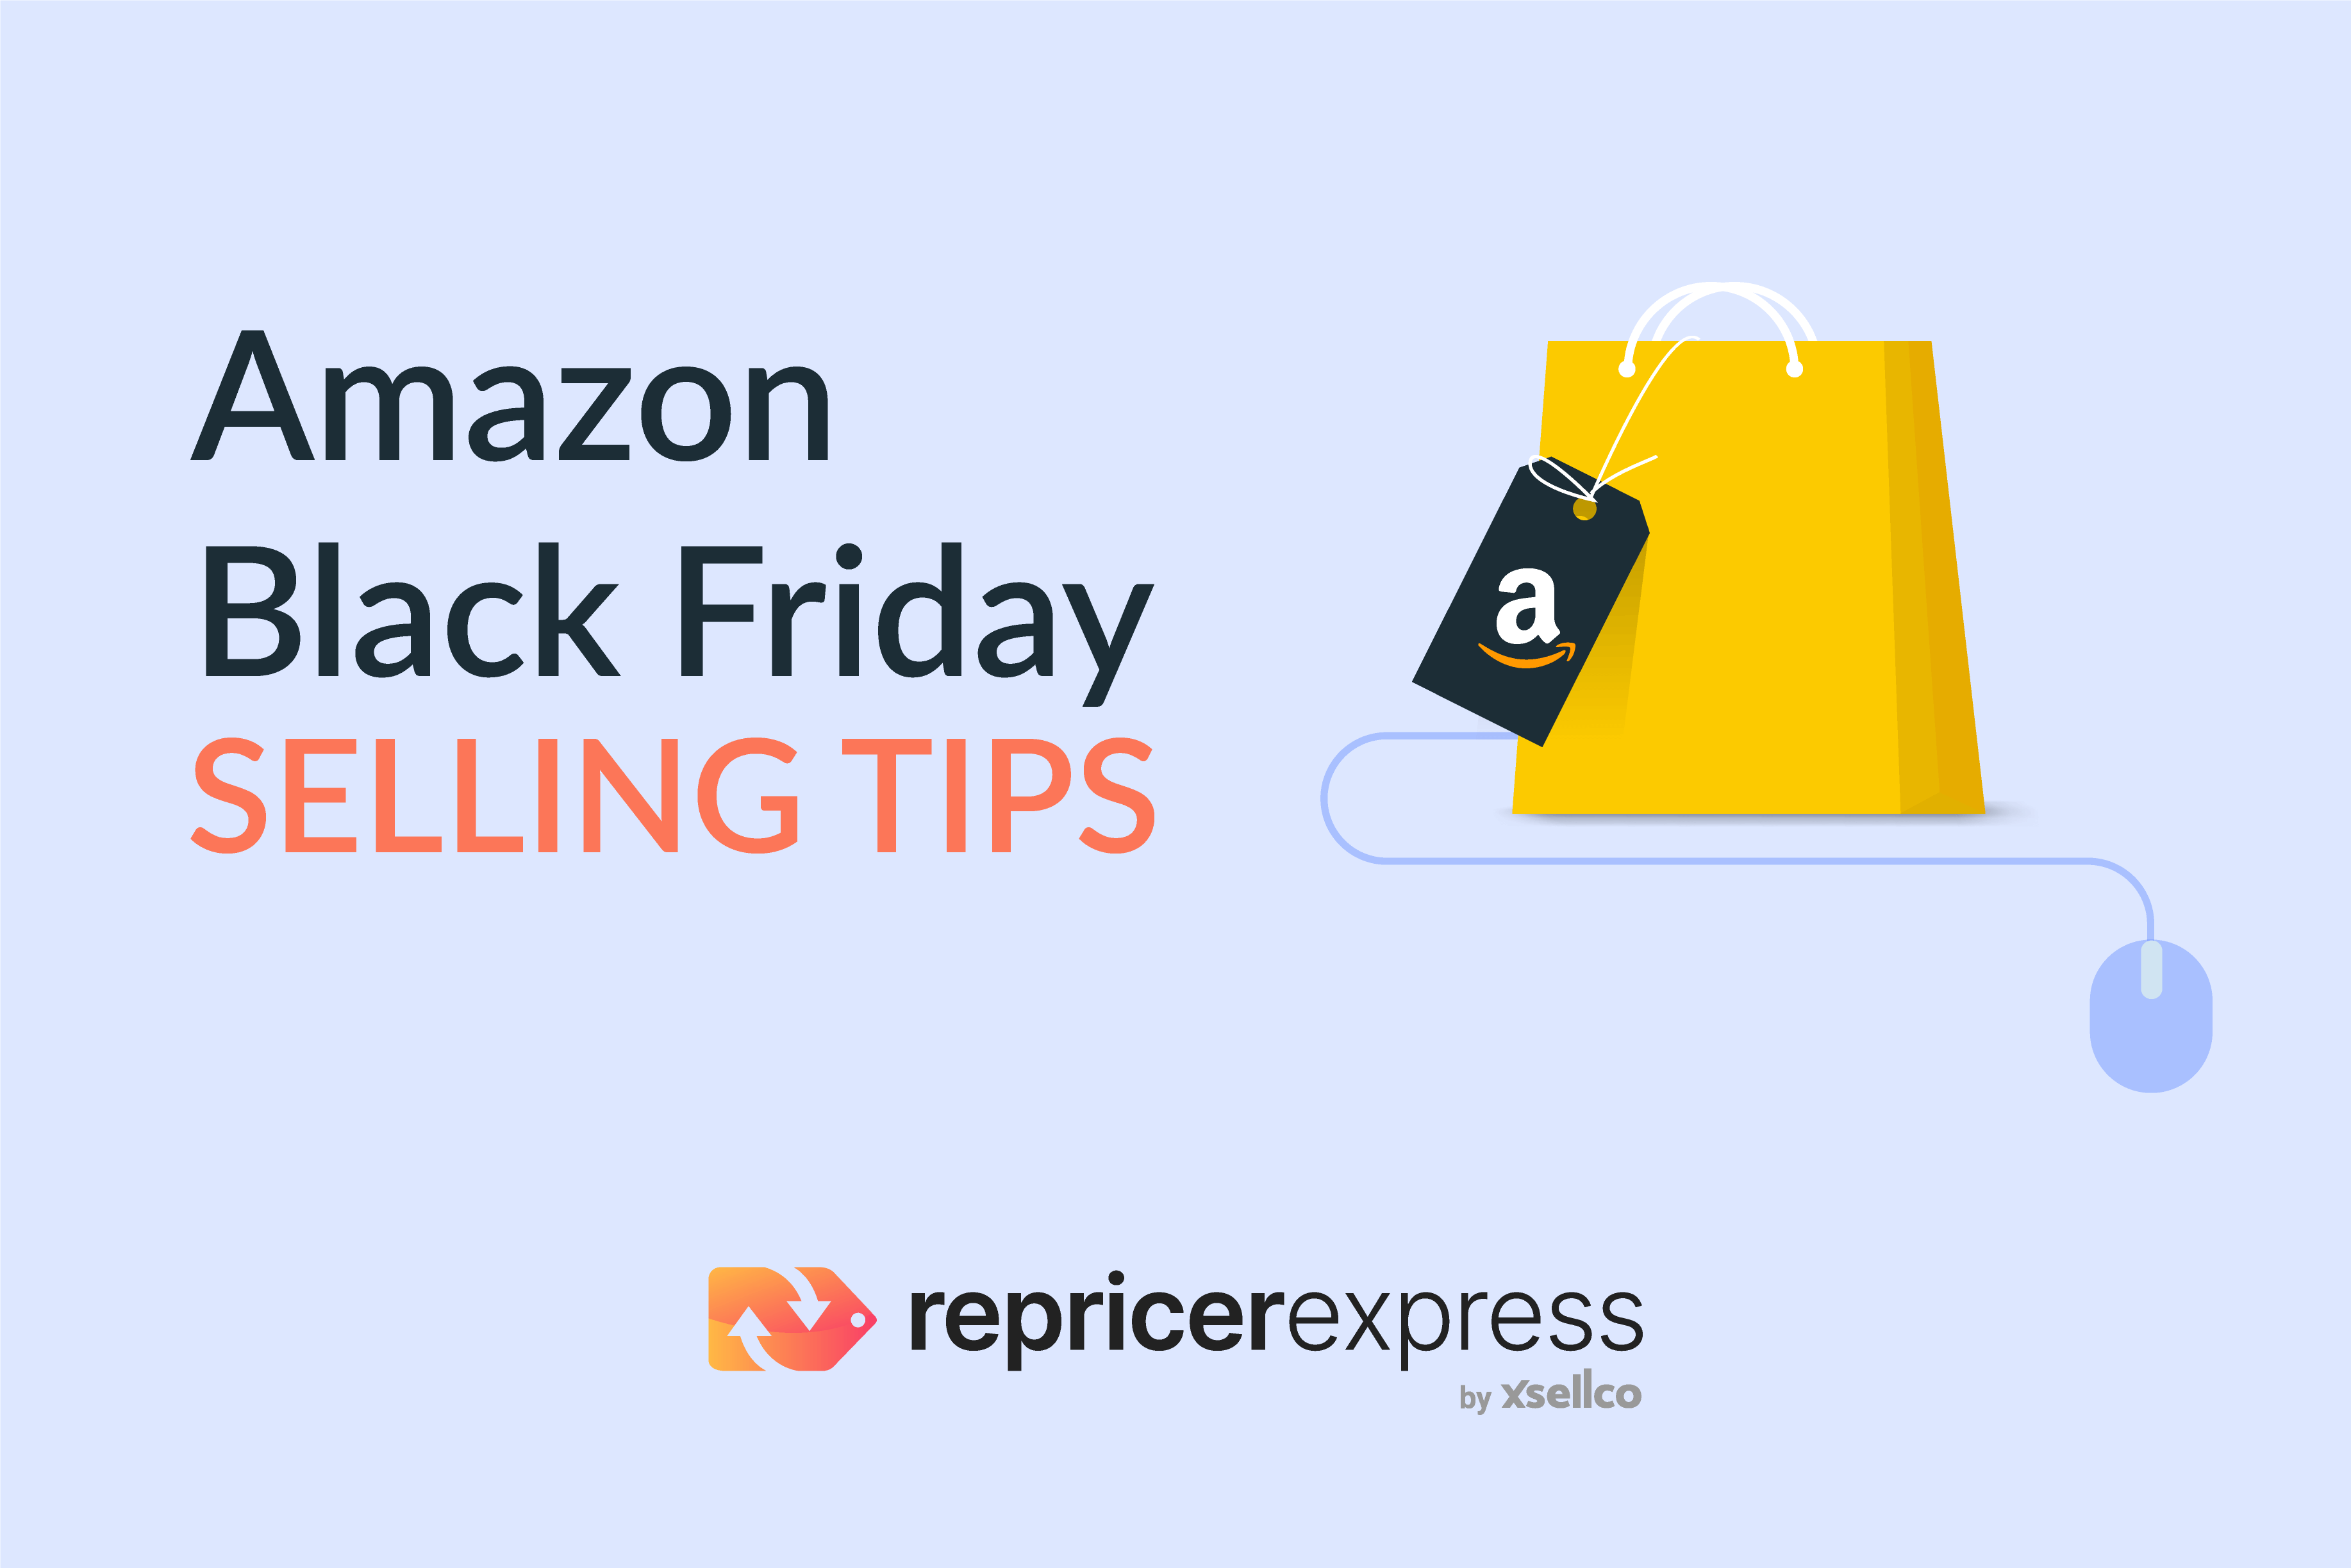 Amazon Black Friday Selling Tips